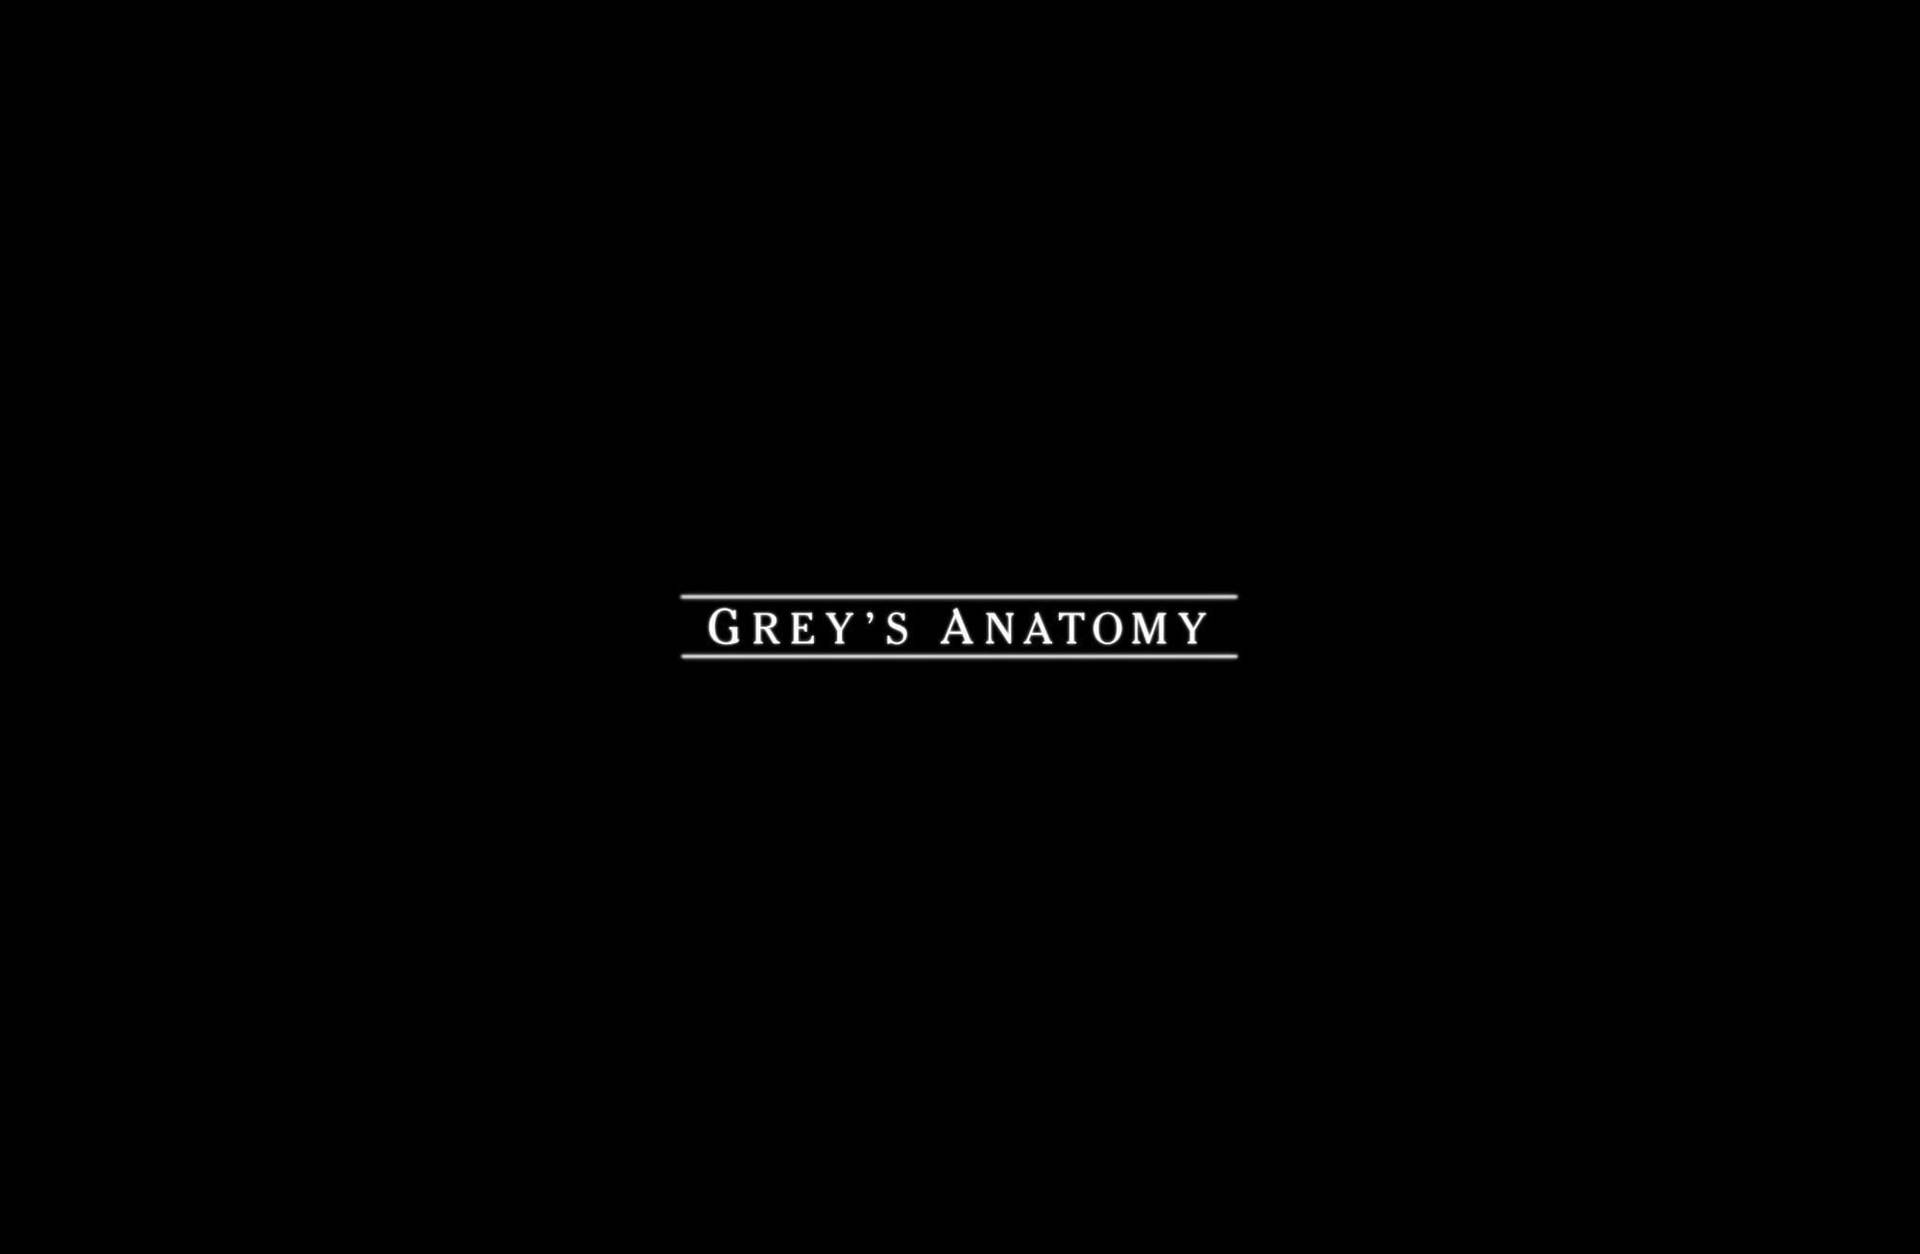 Grey's Anatomy Opening Title